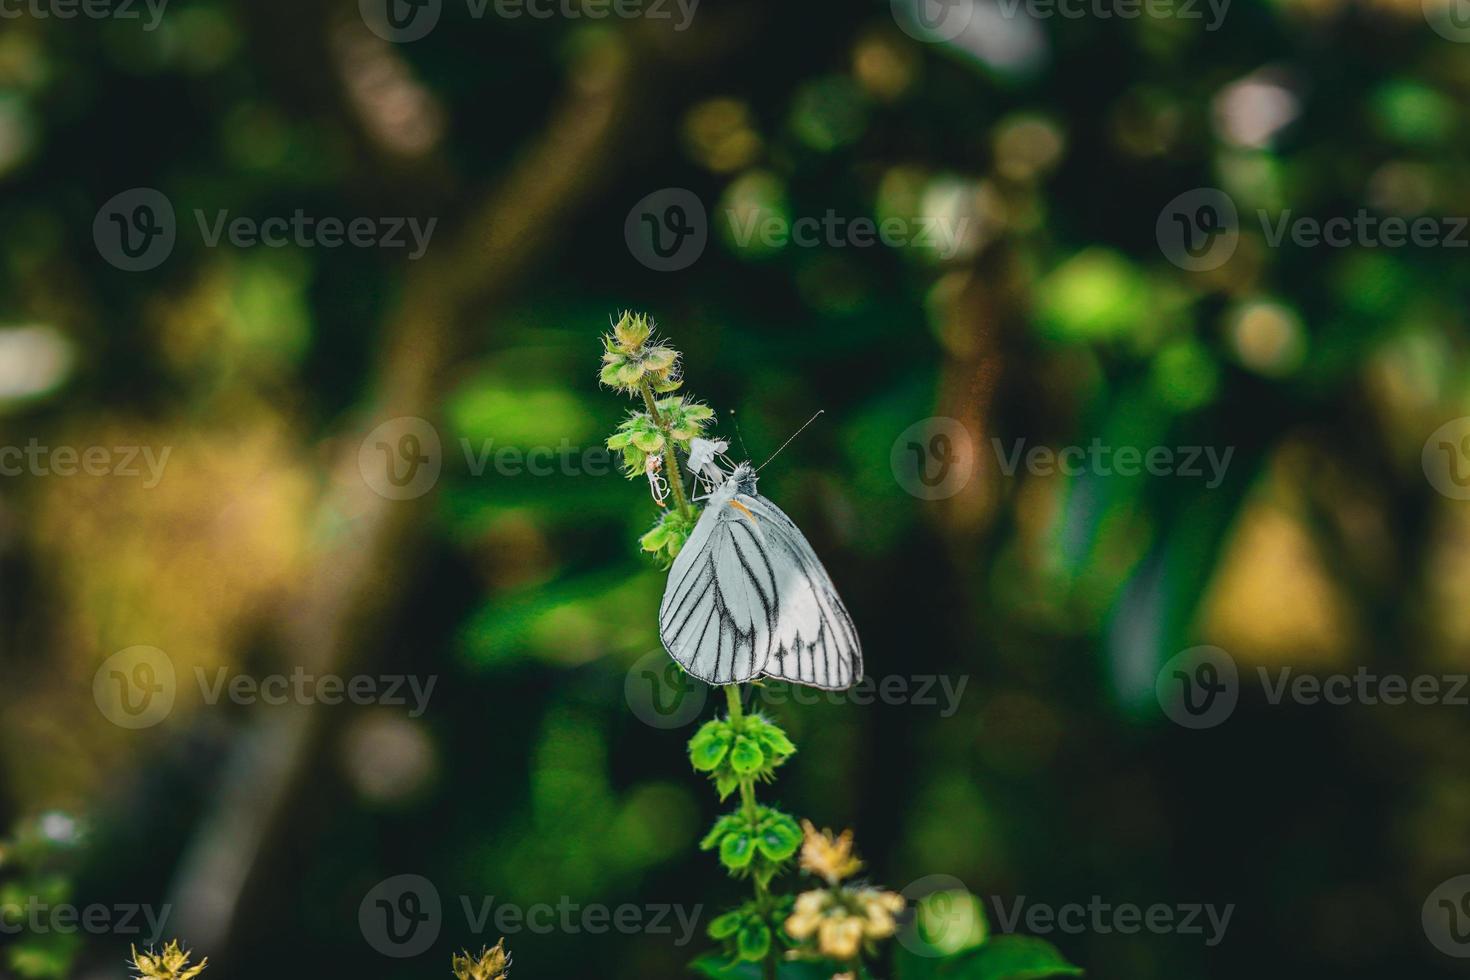 mooie witte vlinder zwart geaderde witte aporie crataegi neergestreken op bloem premium foto